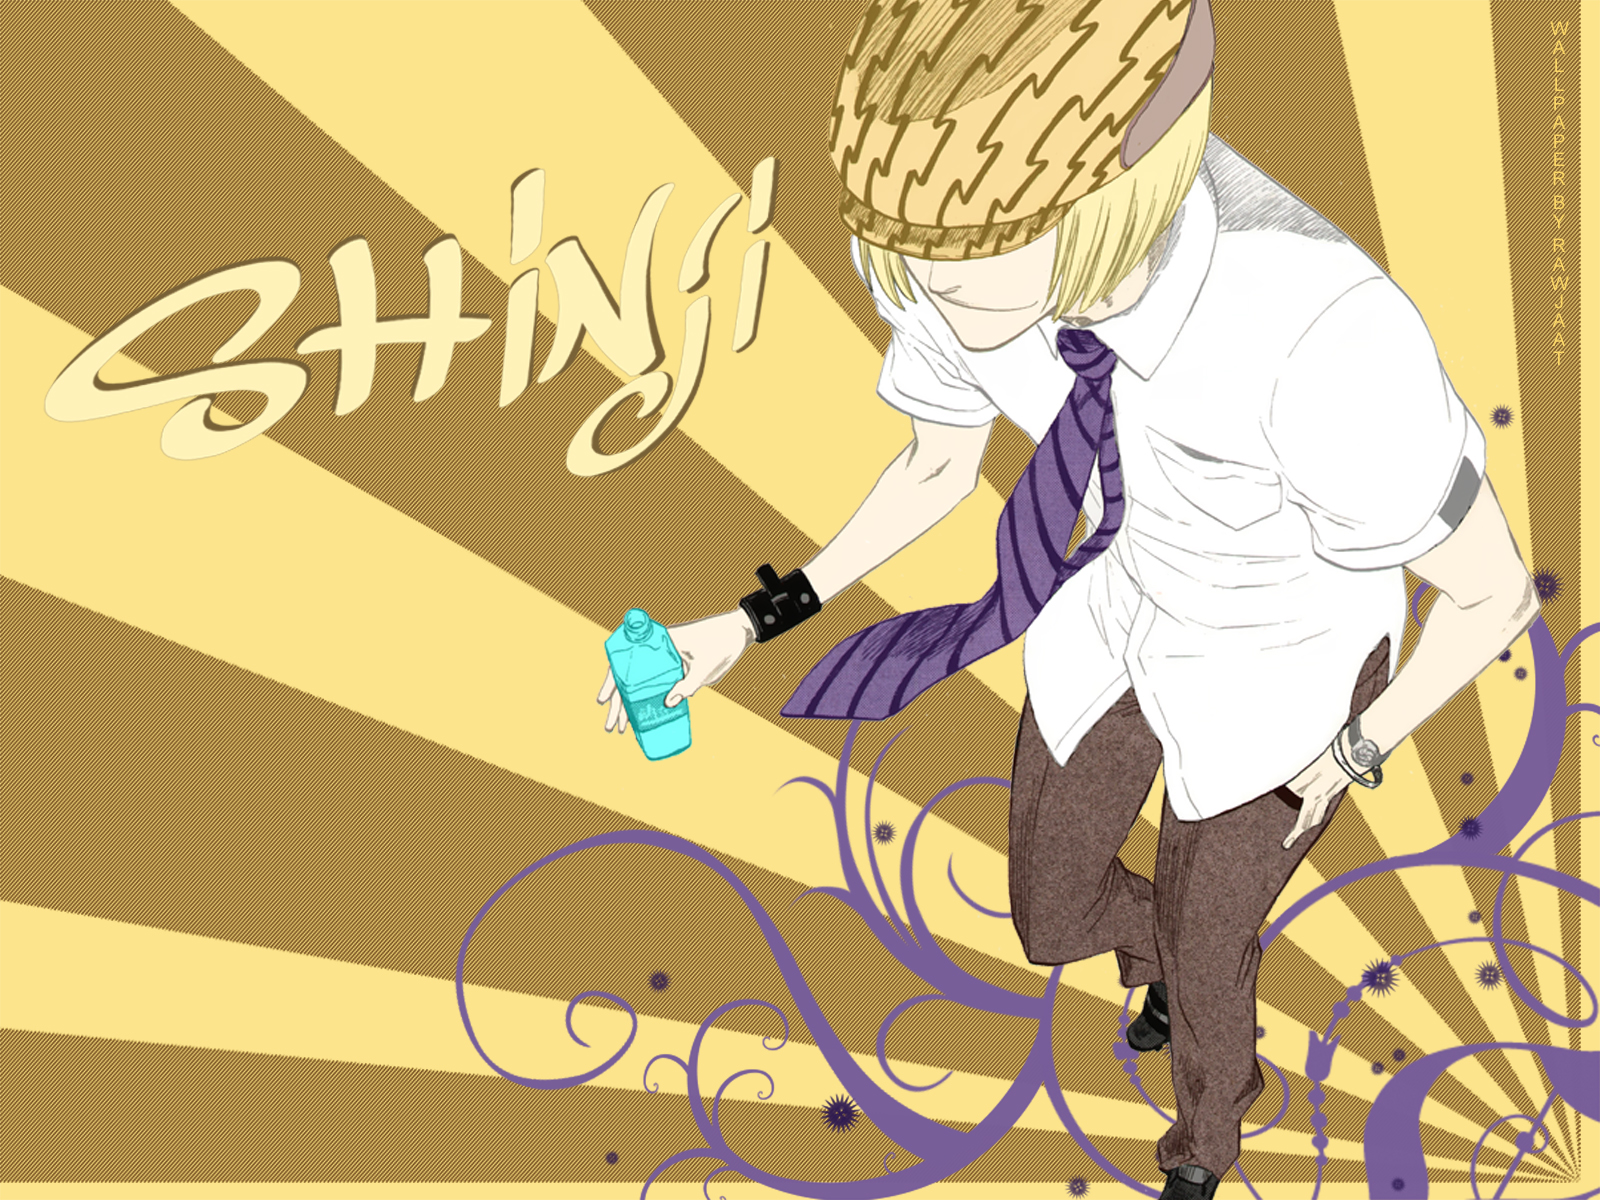 Download mobile wallpaper Shinji Hirako, Bleach, Anime for free.